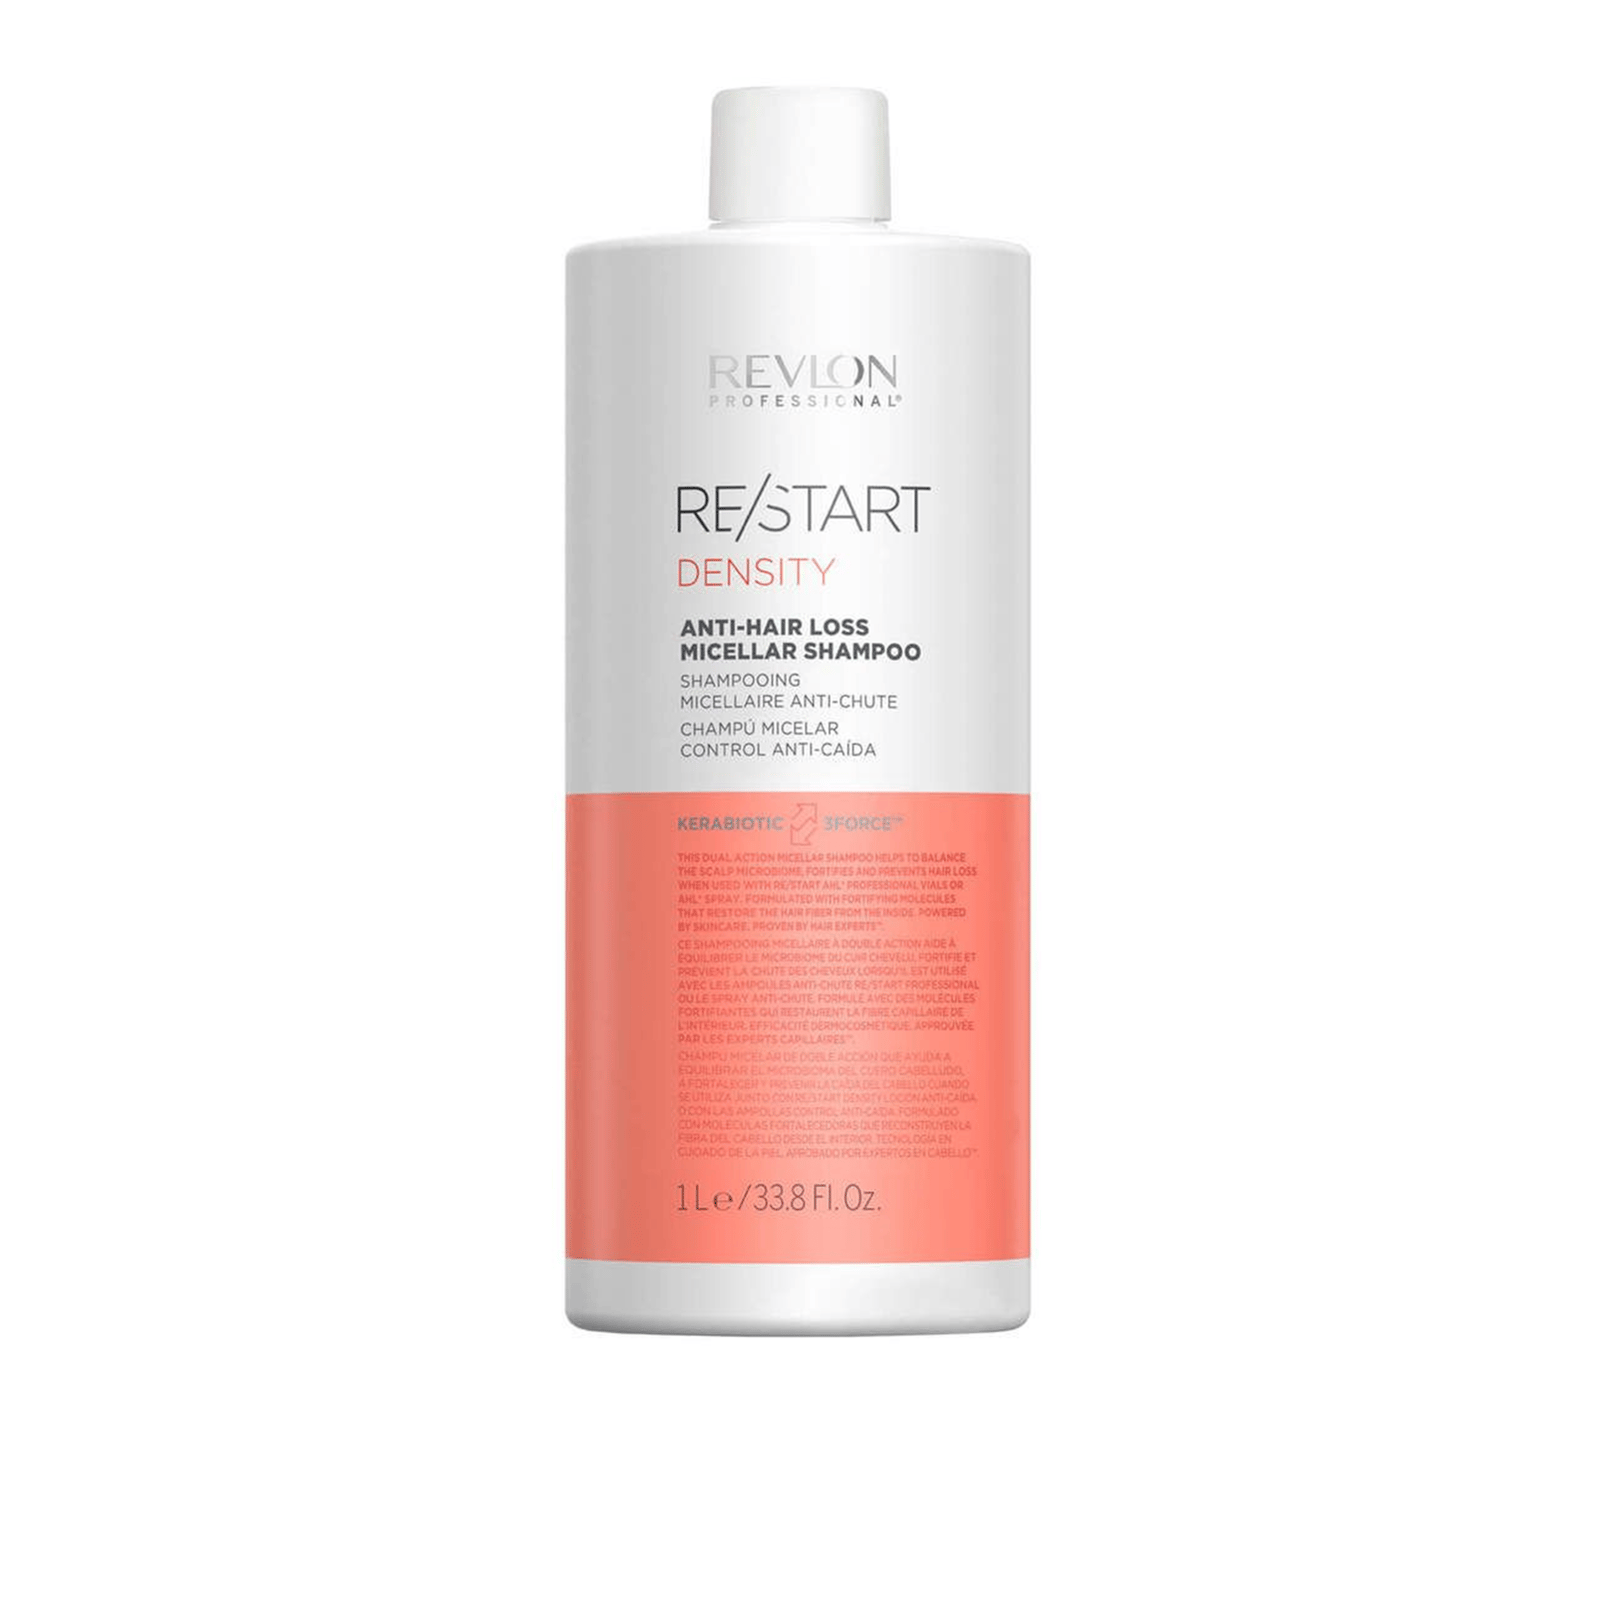 Buy Revlon Loss Anti-Hair USA Re/Start · Density Professional Micellar Shampoo